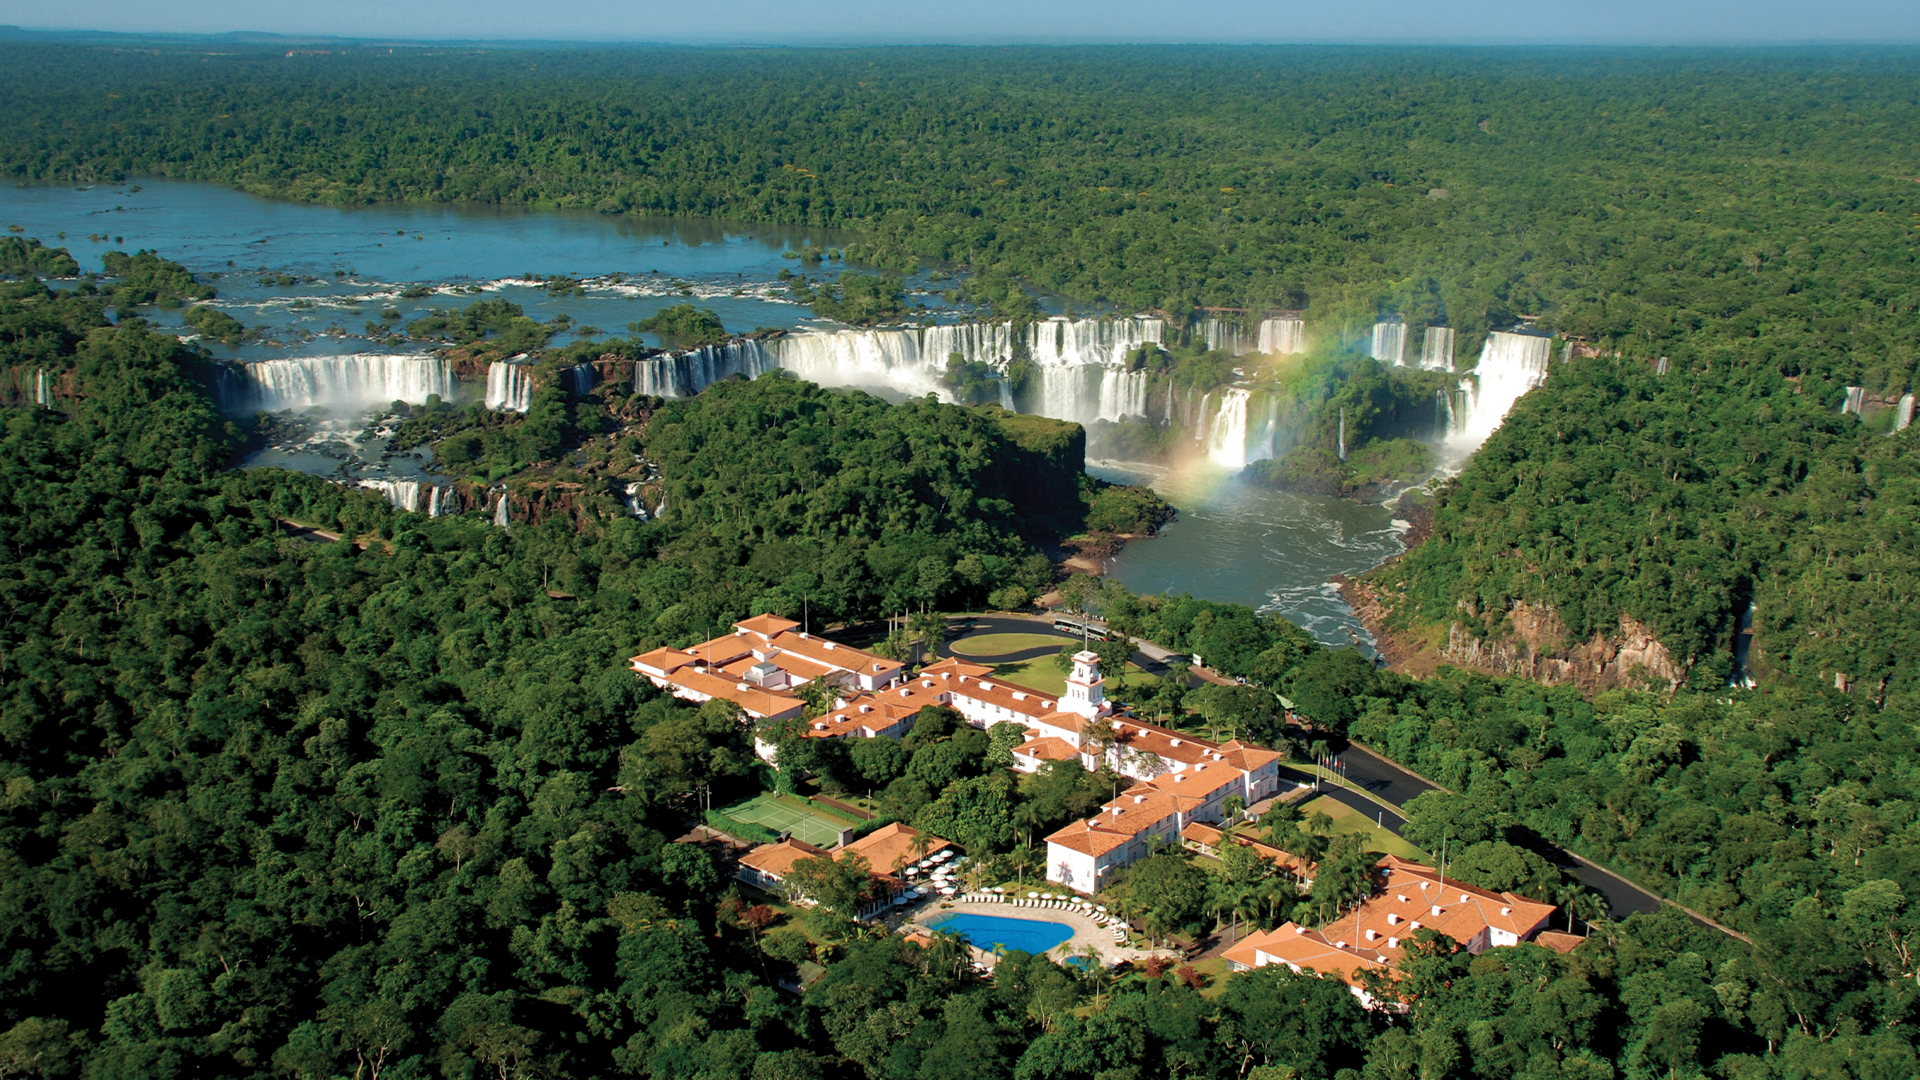 Belmond-Hotel-das-Cataratas-Iguazu-Falls